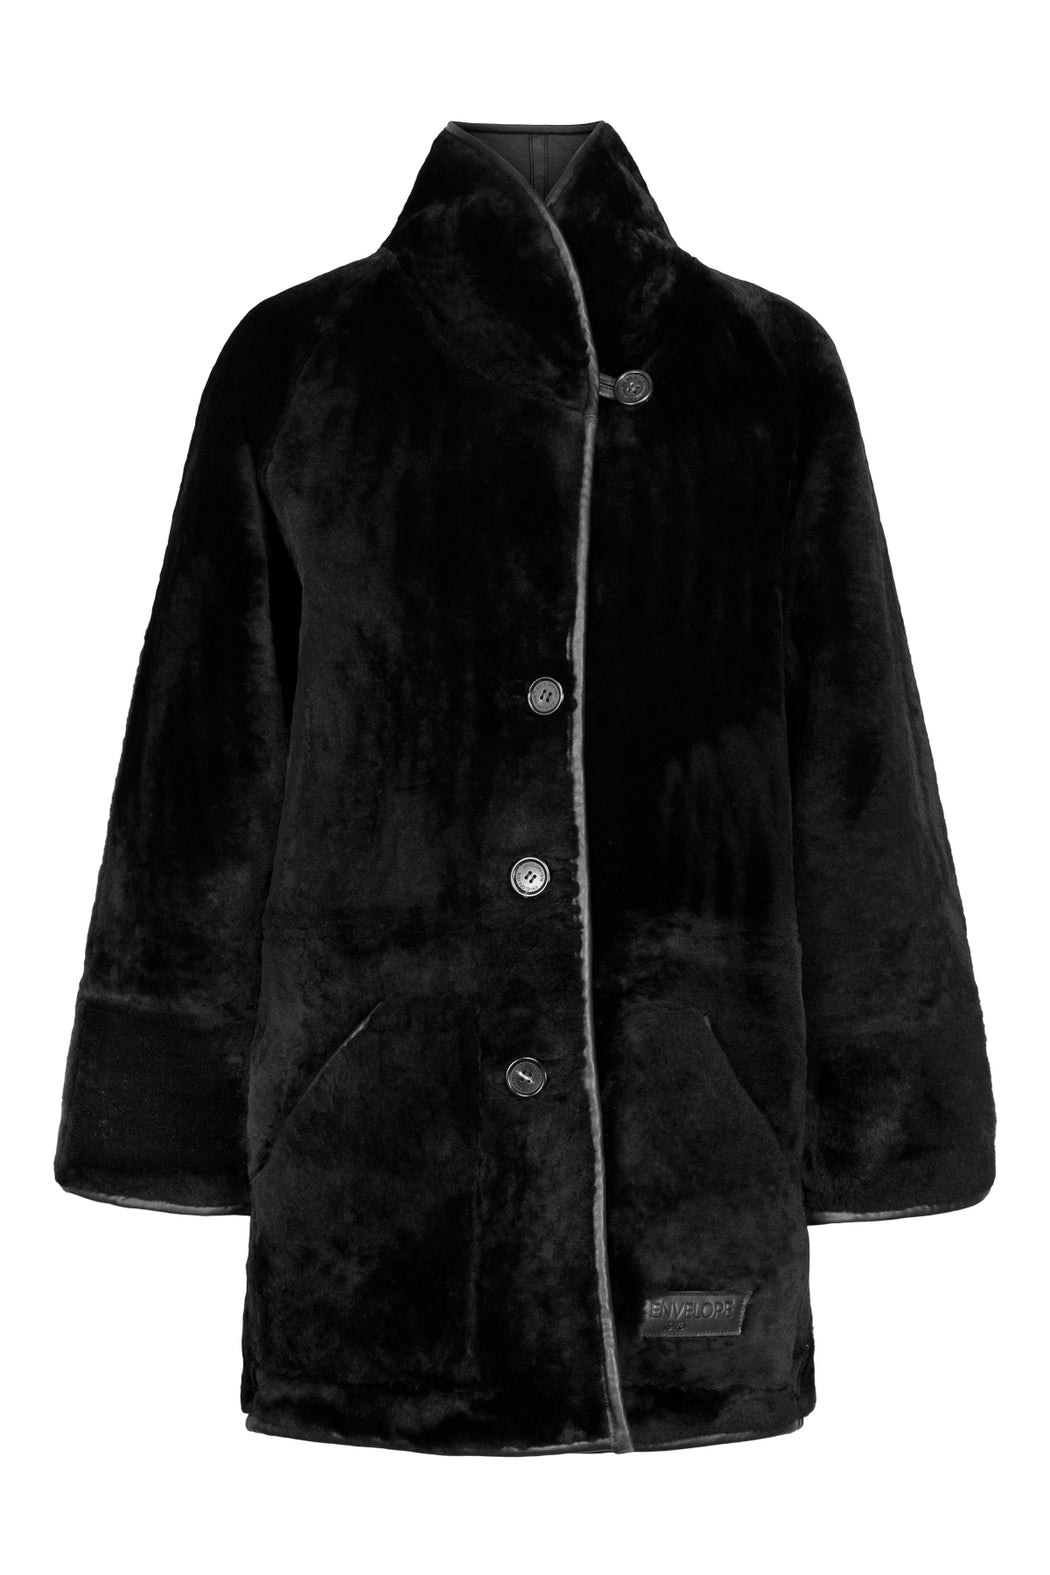 Envelope1976 Hanna jacket - Shearling Jacket Black